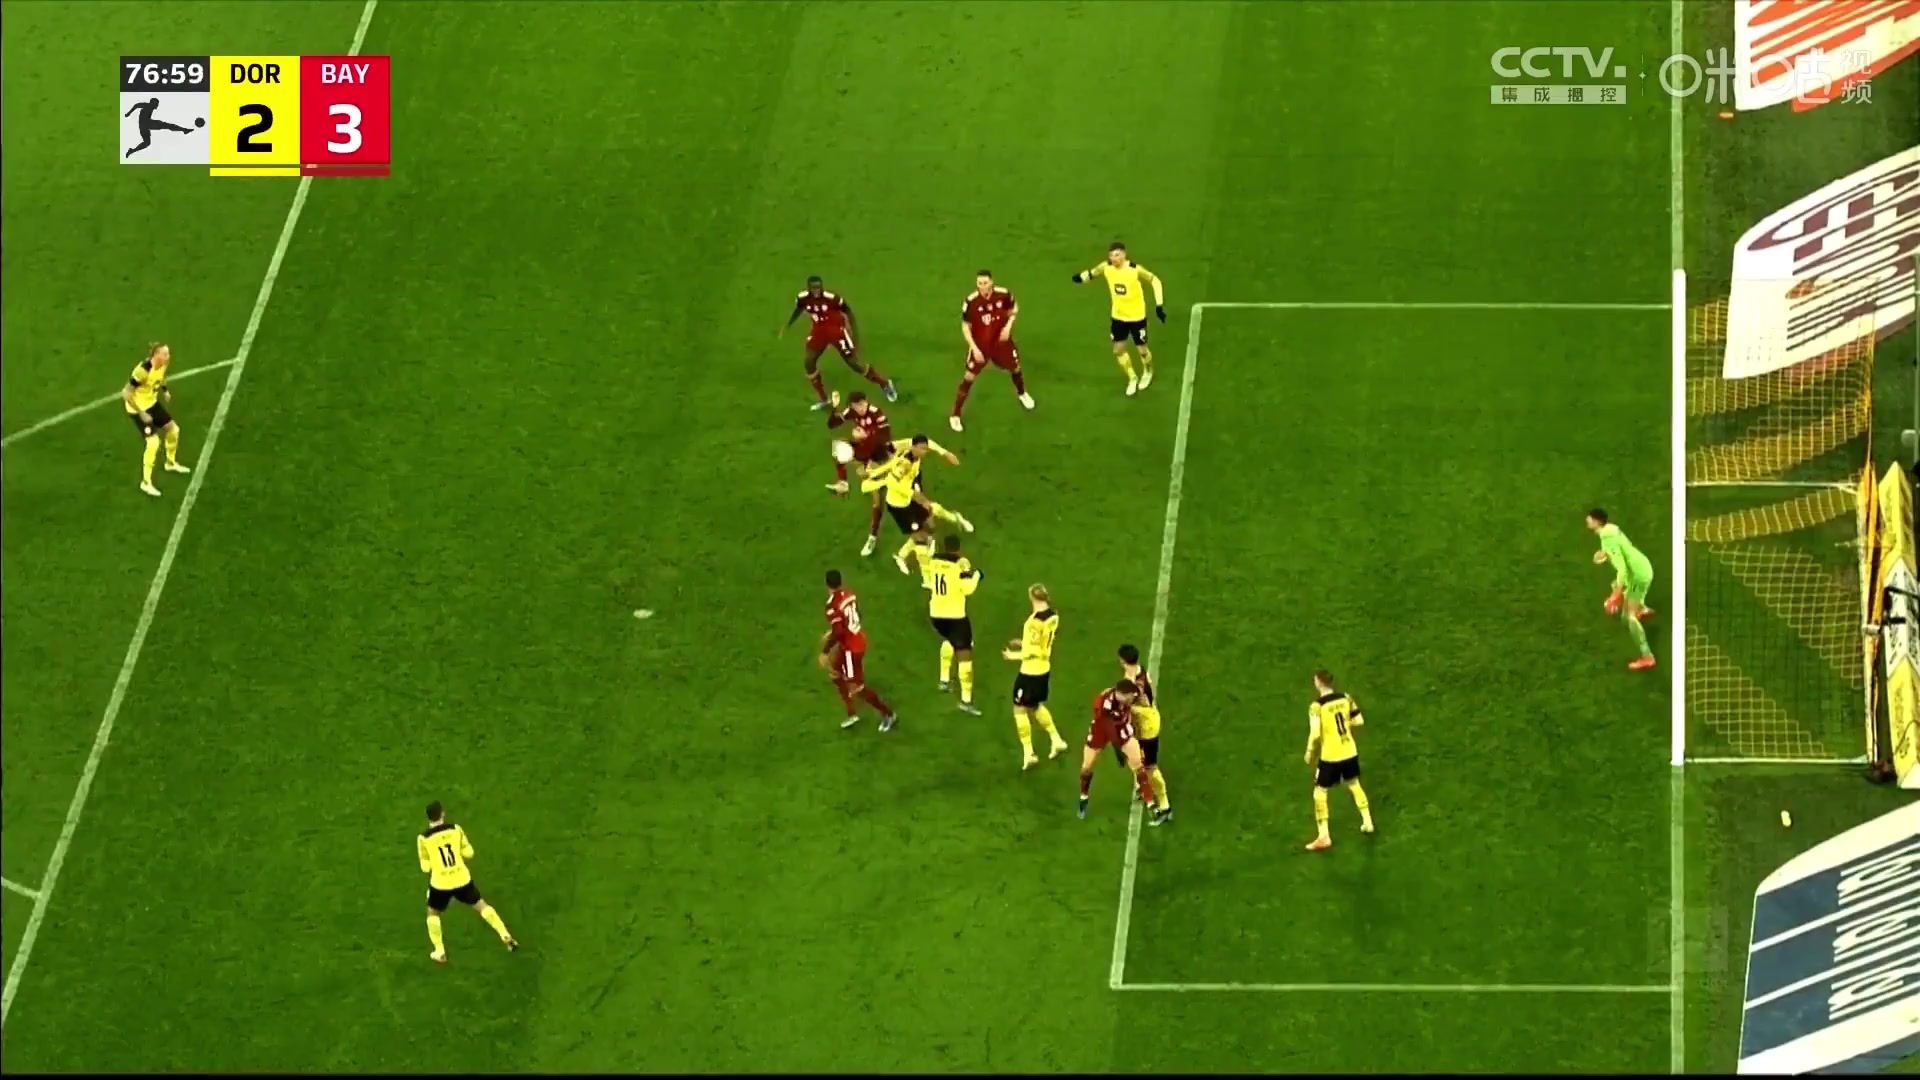 Bundesliga Borussia Dortmund Vs Bayern Munchen Robert Lewandowski Goal in 77 min, Score 2:3